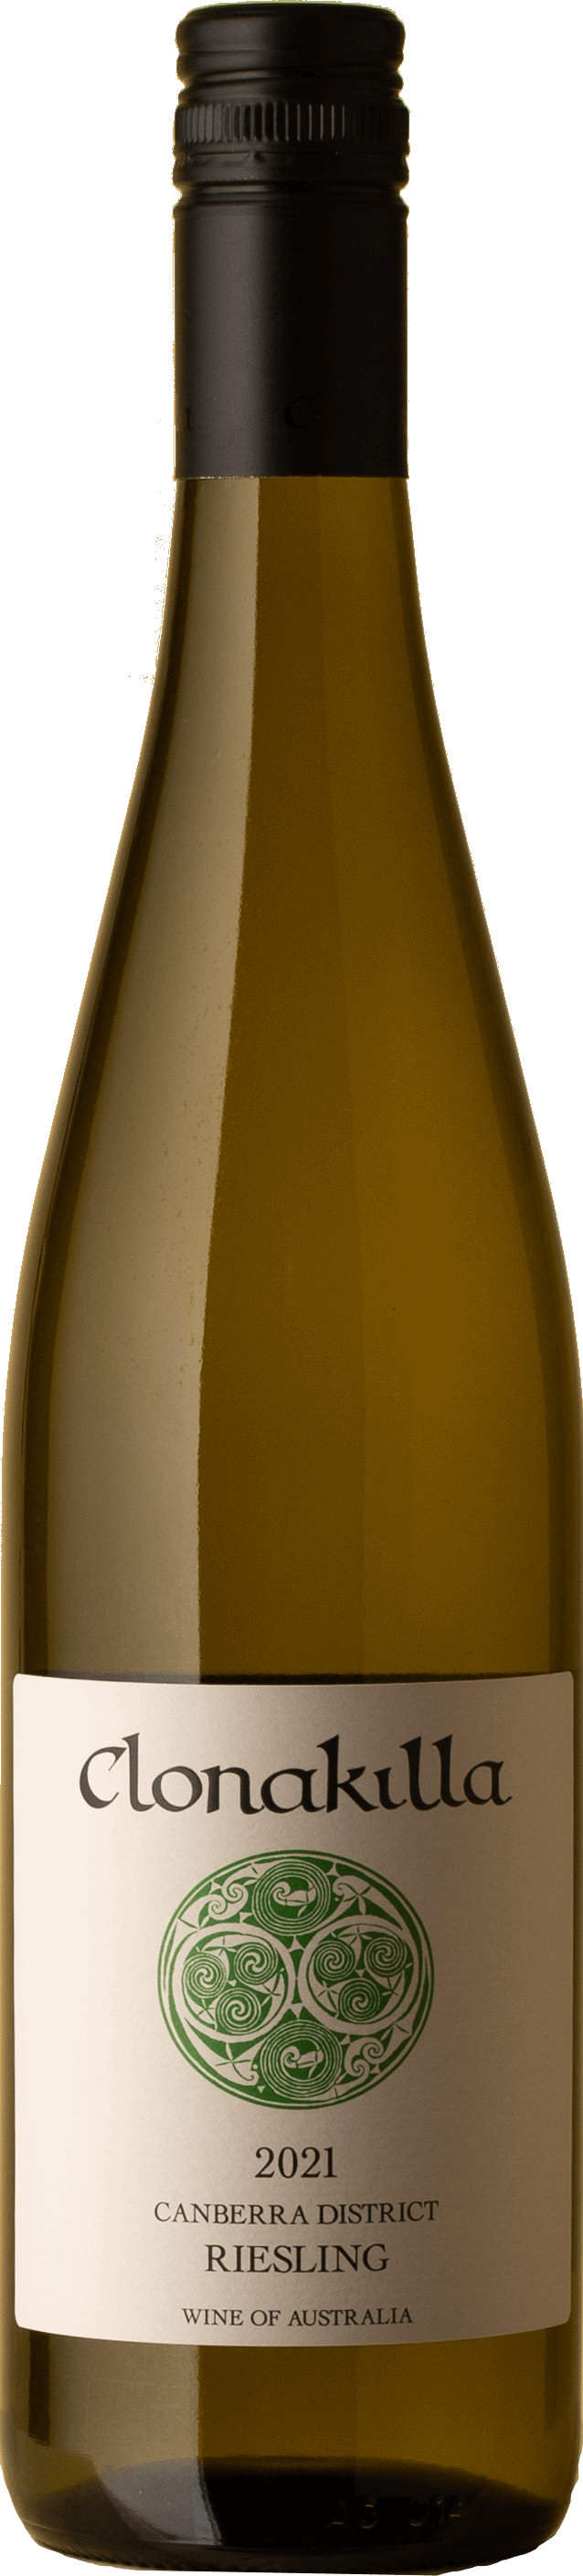 Clonakilla - Riesling 2021 White Wine